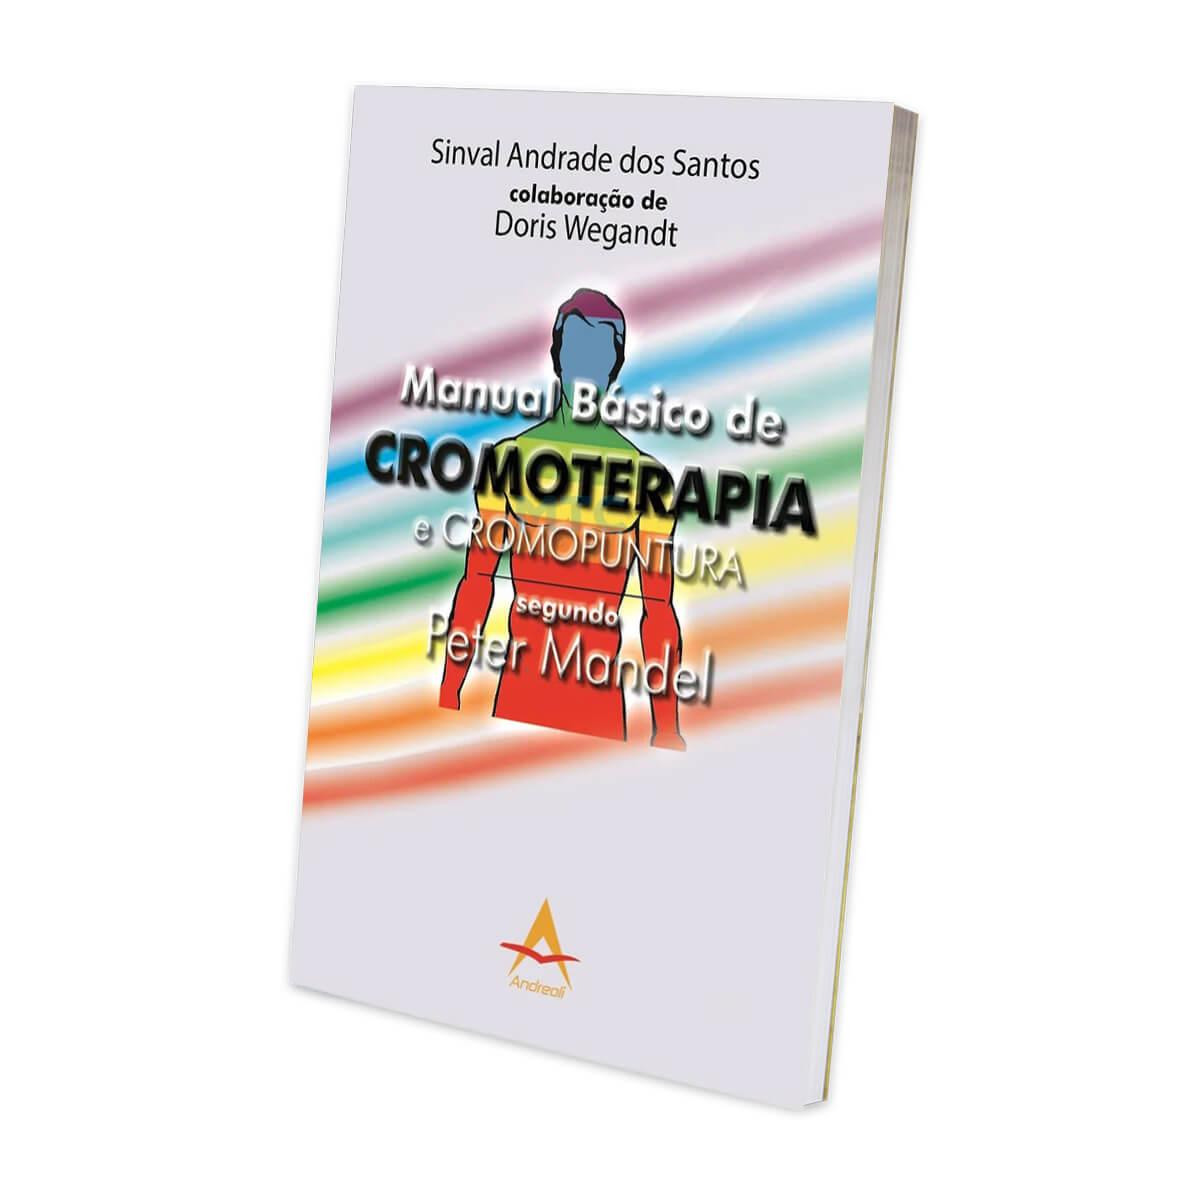 Manual Básico de Cromoterapia e Cromopuntura Segundo Peter Mandel - Ed. Andreoli